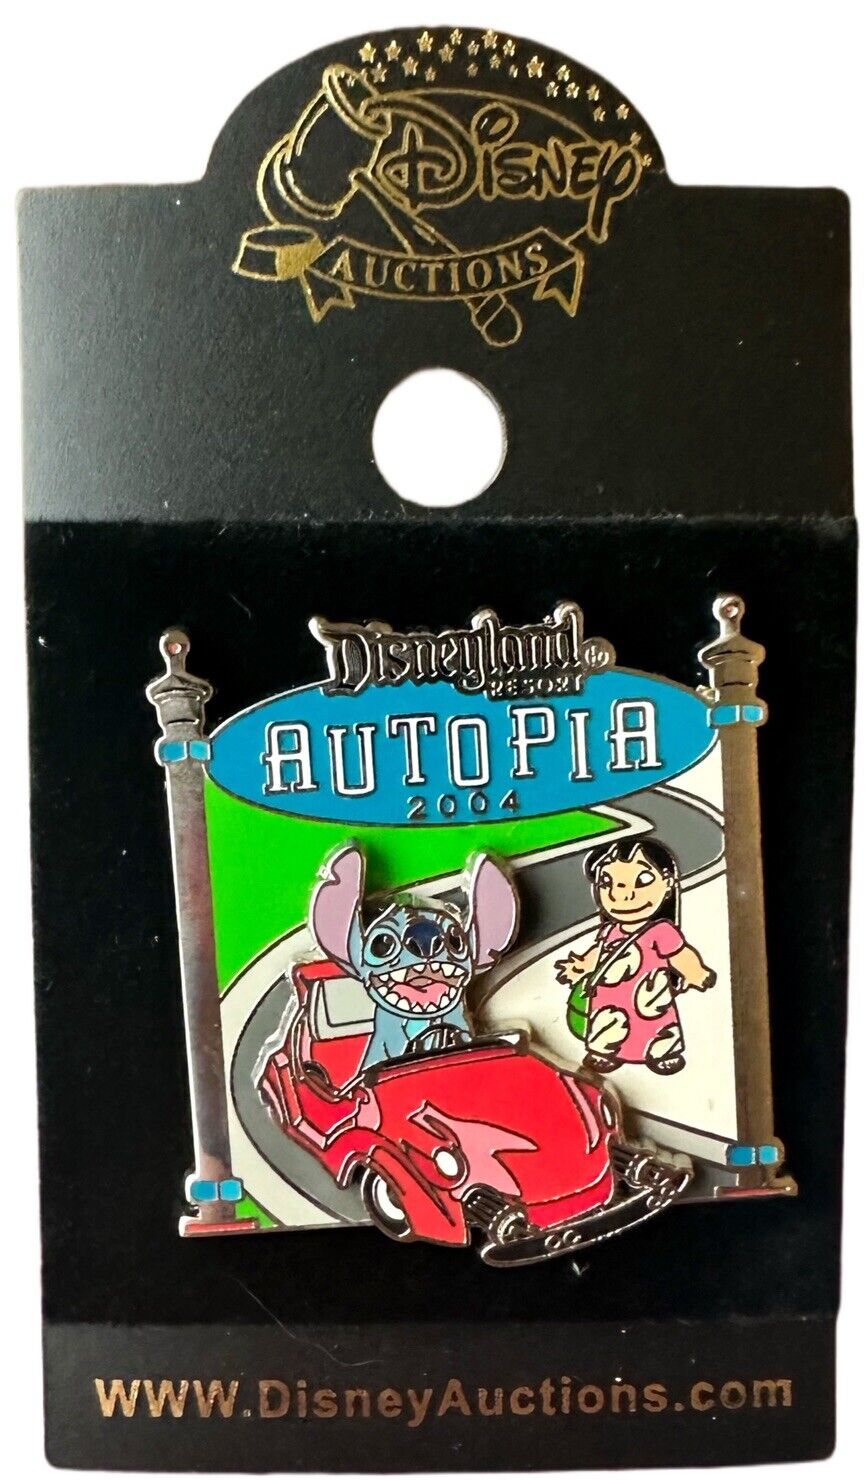 New Disney Auctions Lilo and Stitch Disneyland Autopia 2004 LE 1000 Pin